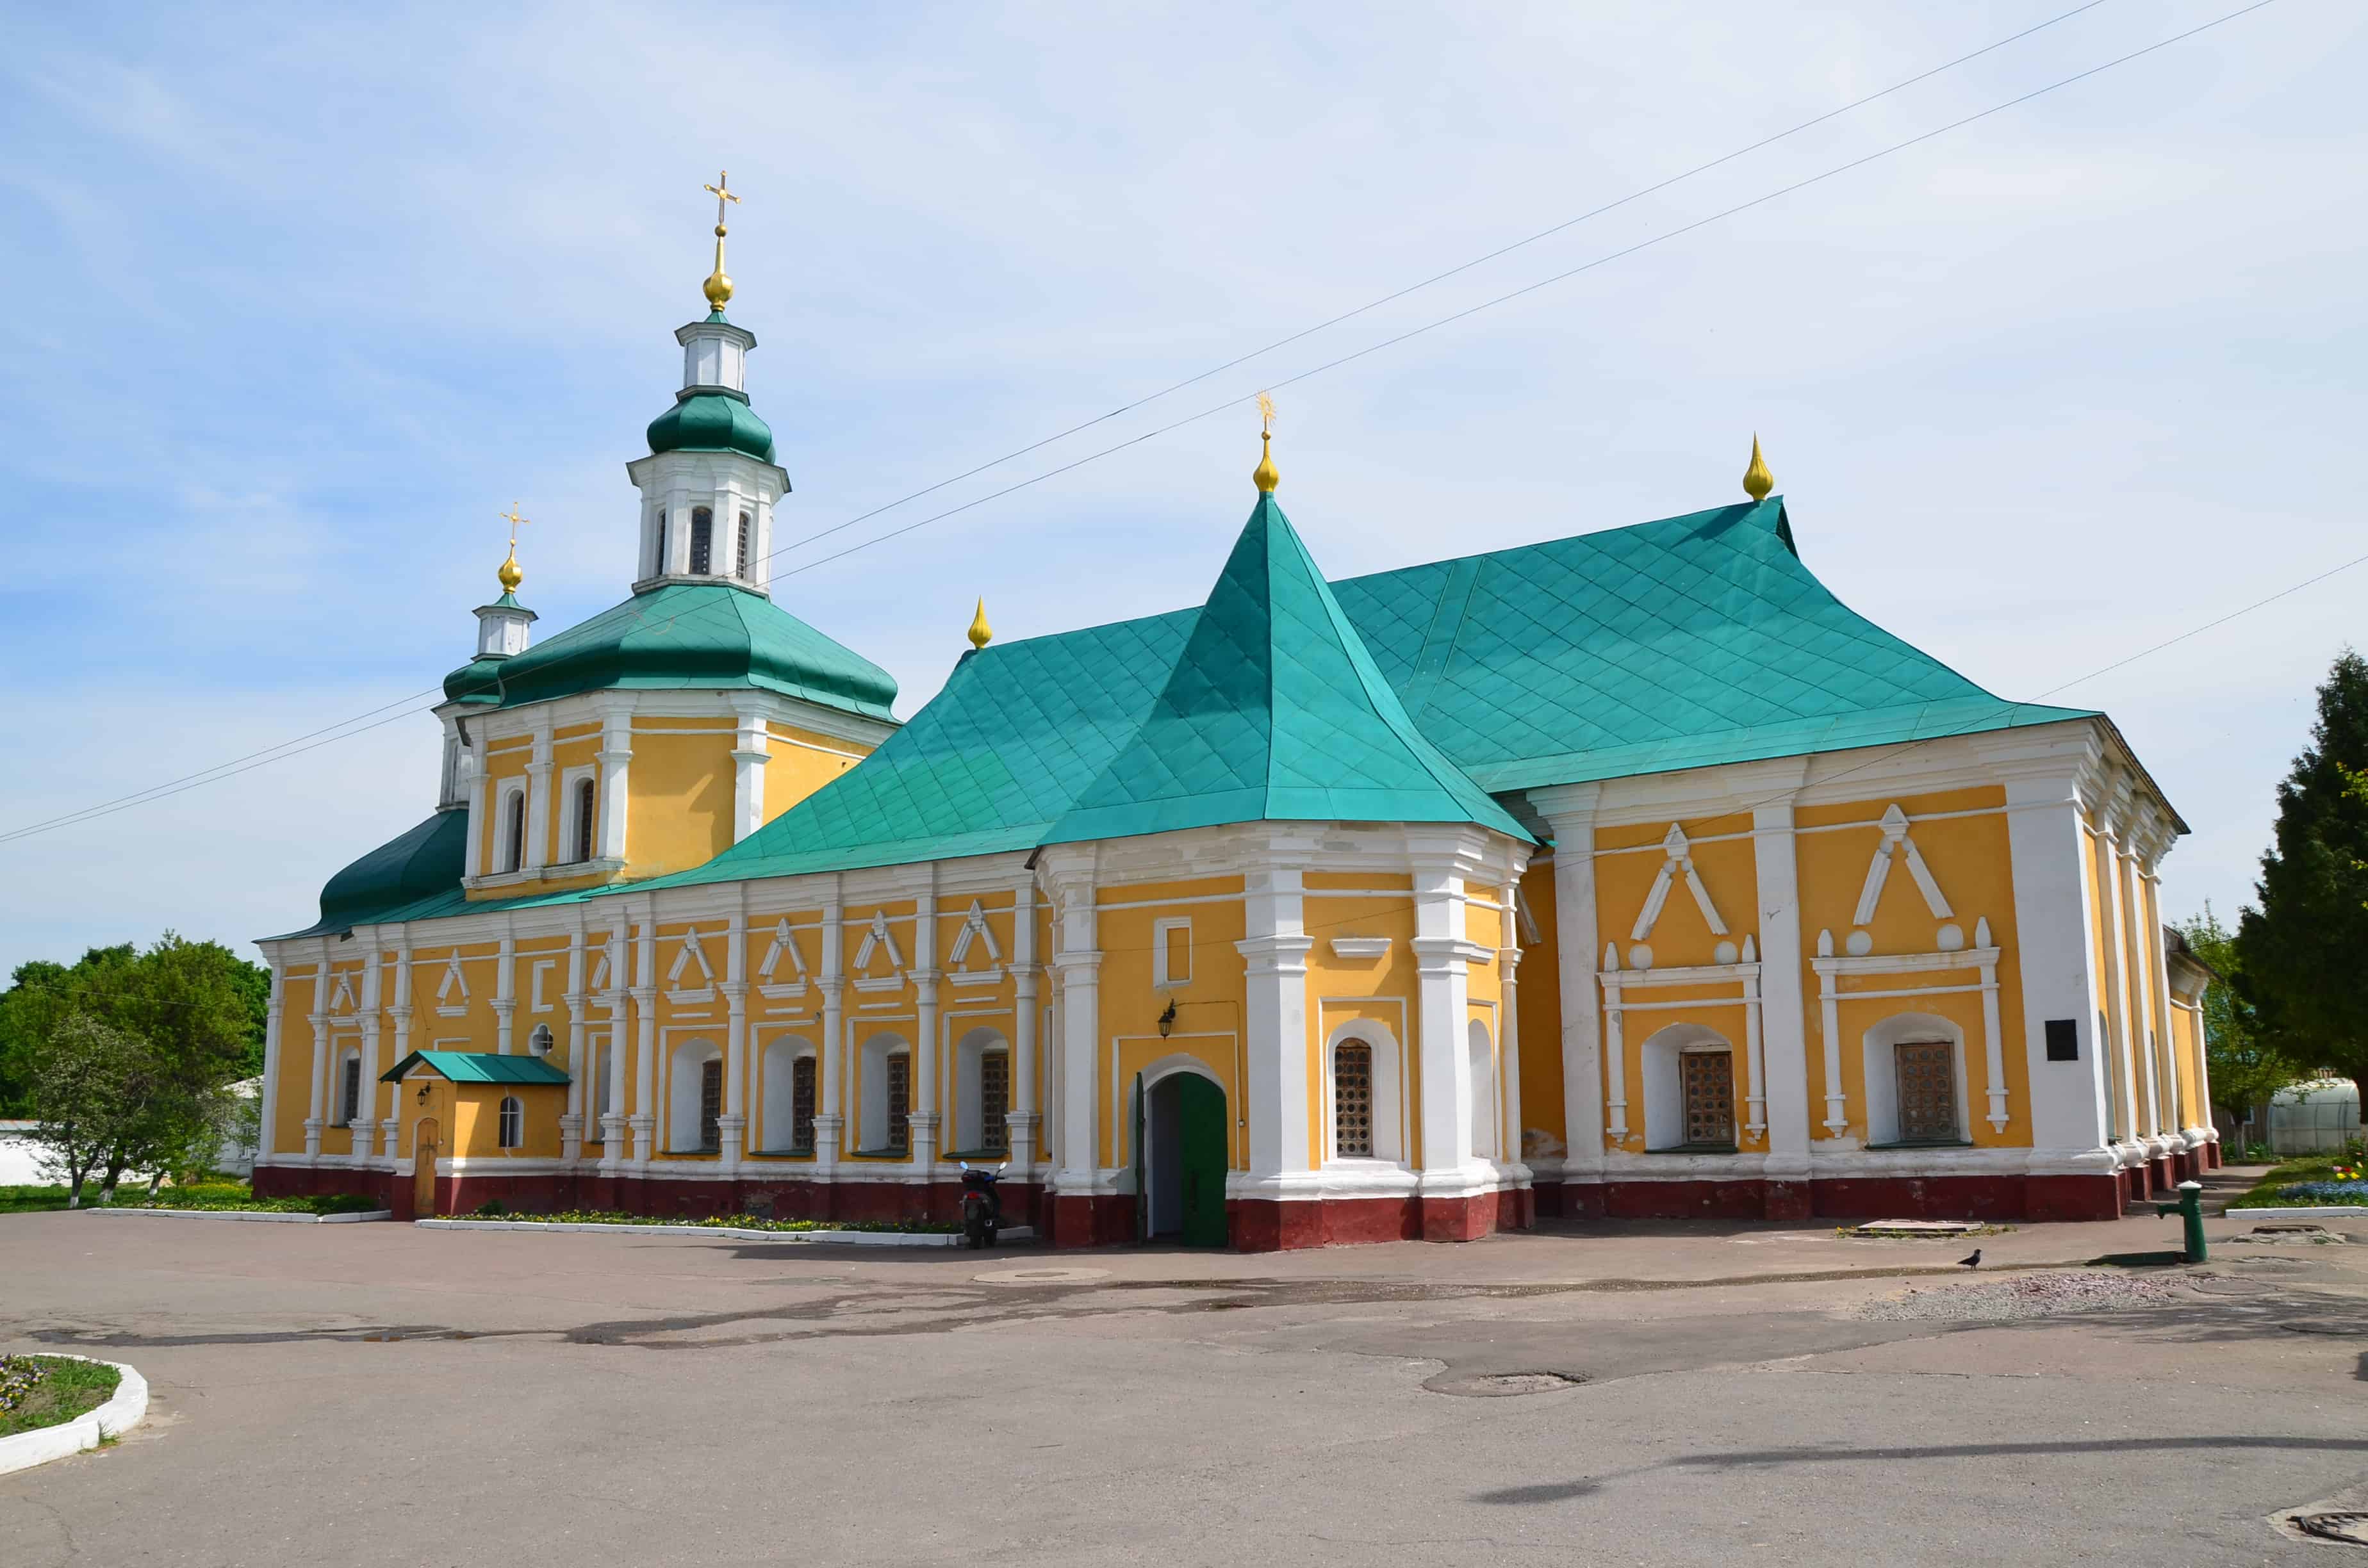 Vedenskaya Church at Trinity Monastery in Chernihiv, Ukraine